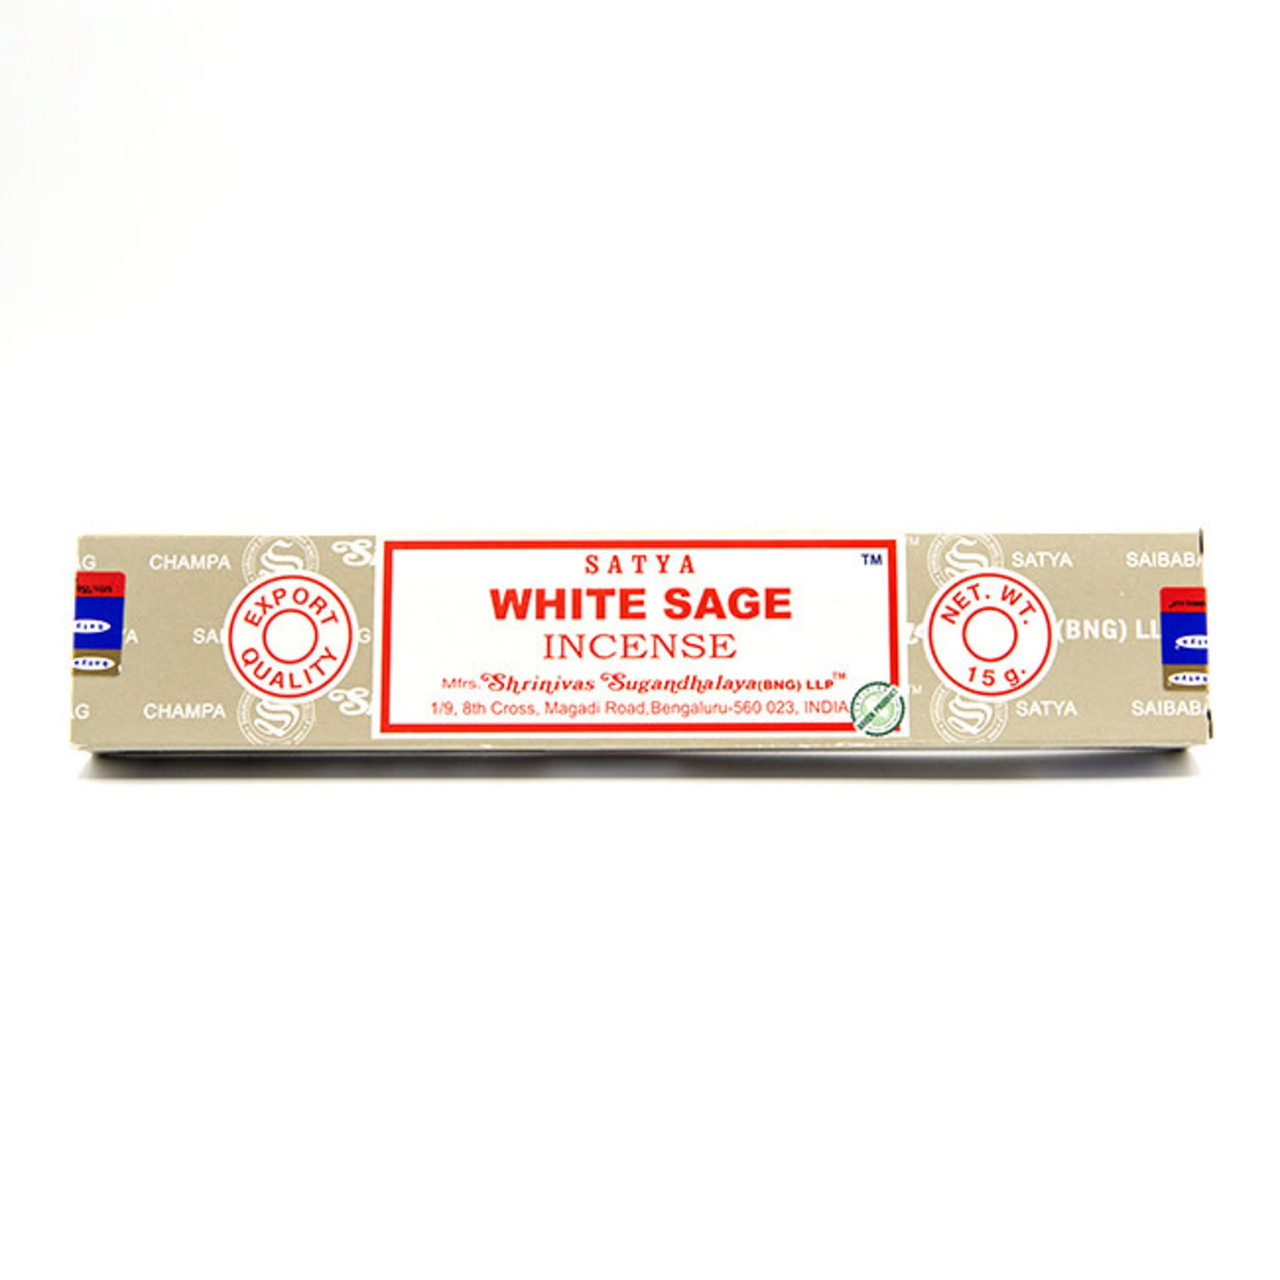 Satya Incense Sticks 15 gms